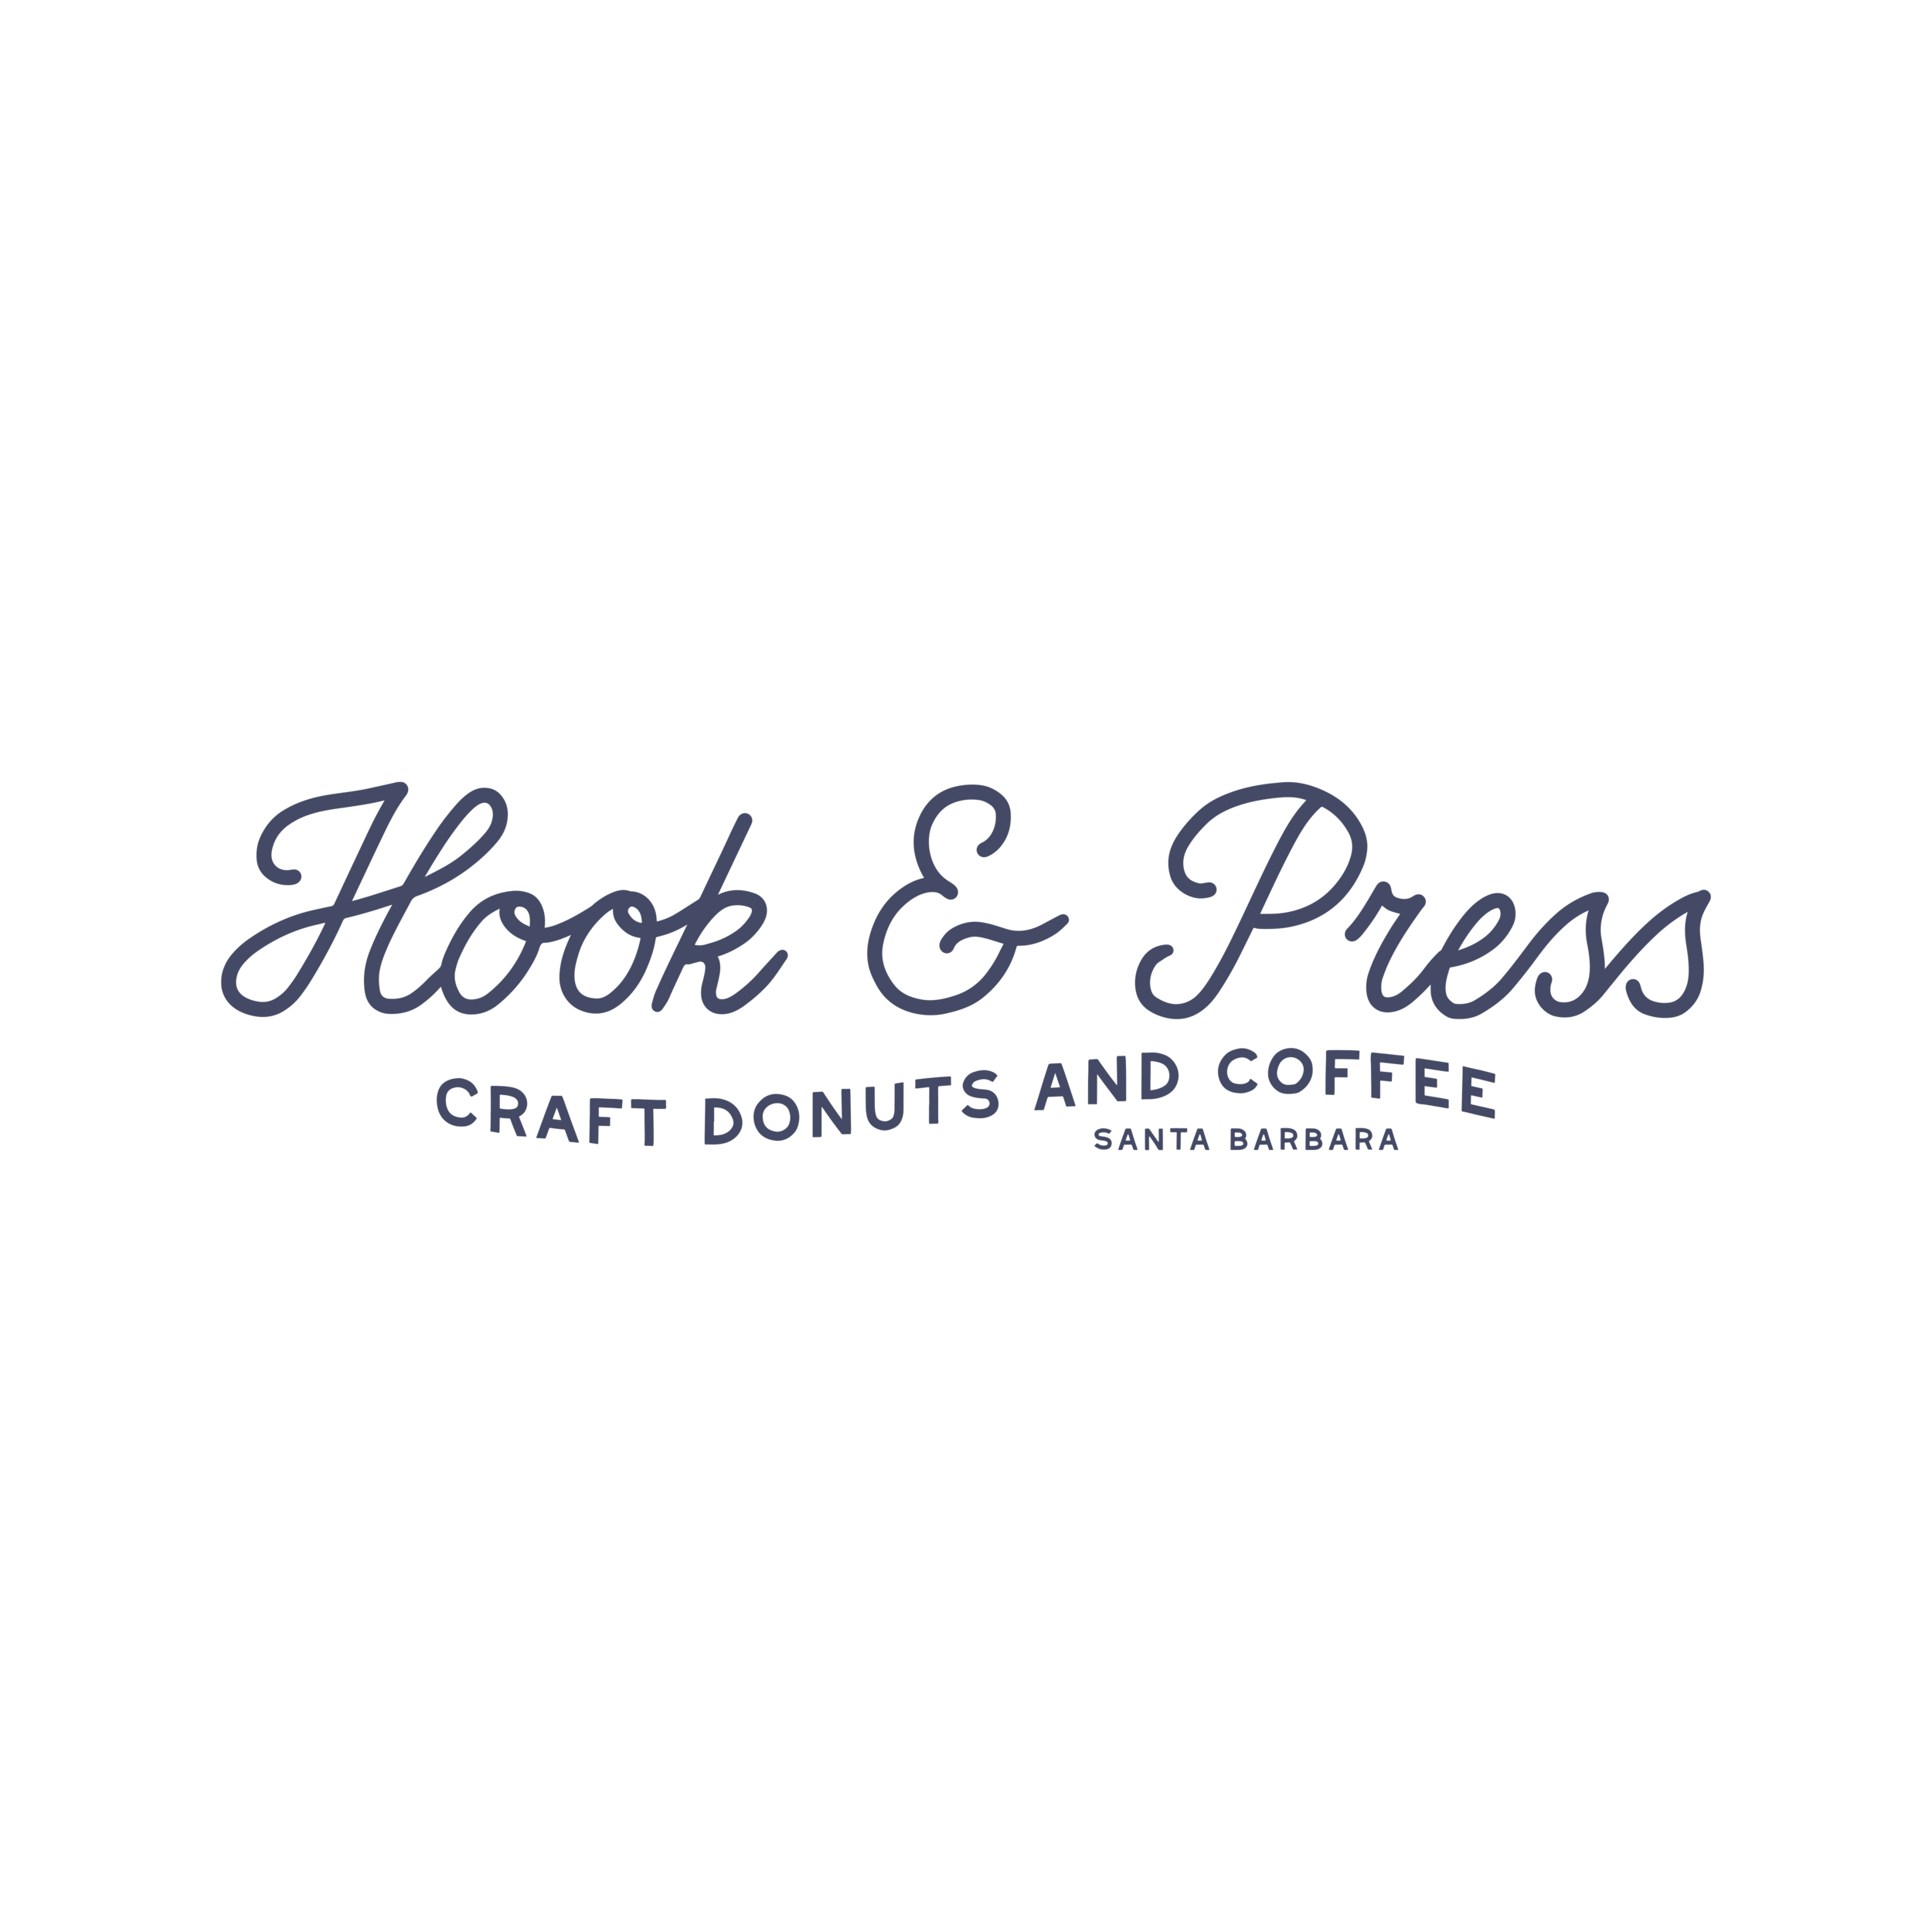 Hook & Press